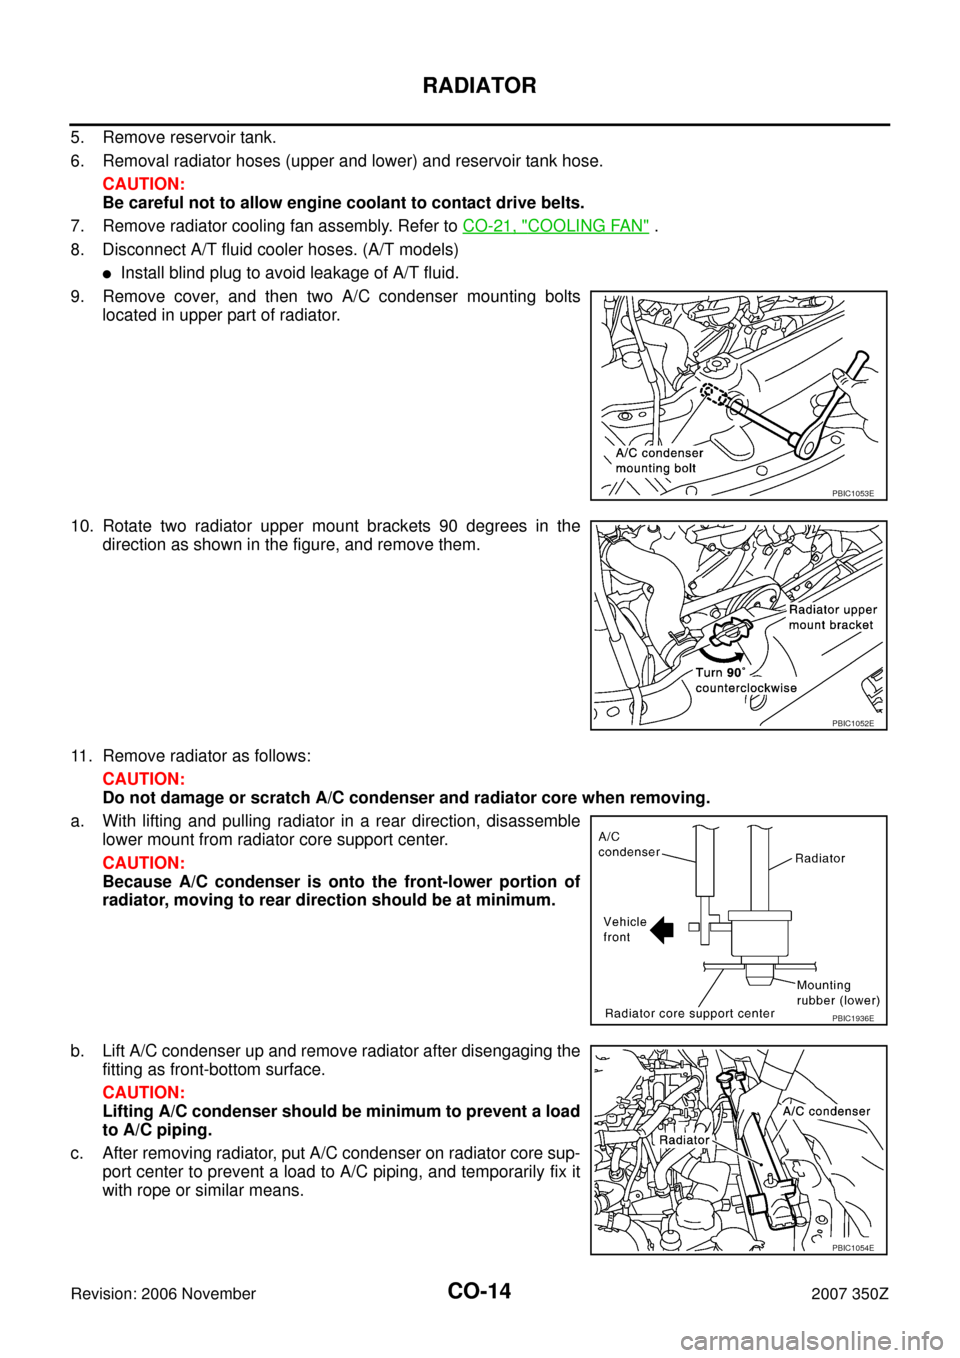 NISSAN 350Z 2007 Z33 Engine Cooling System Workshop Manual CO-14
RADIATOR
Revision: 2006 November2007 350Z
5. Remove reservoir tank.
6. Removal radiator hoses (upper and lower) and reservoir tank hose.
CAUTION:
Be careful not to allow engine coolant to contac